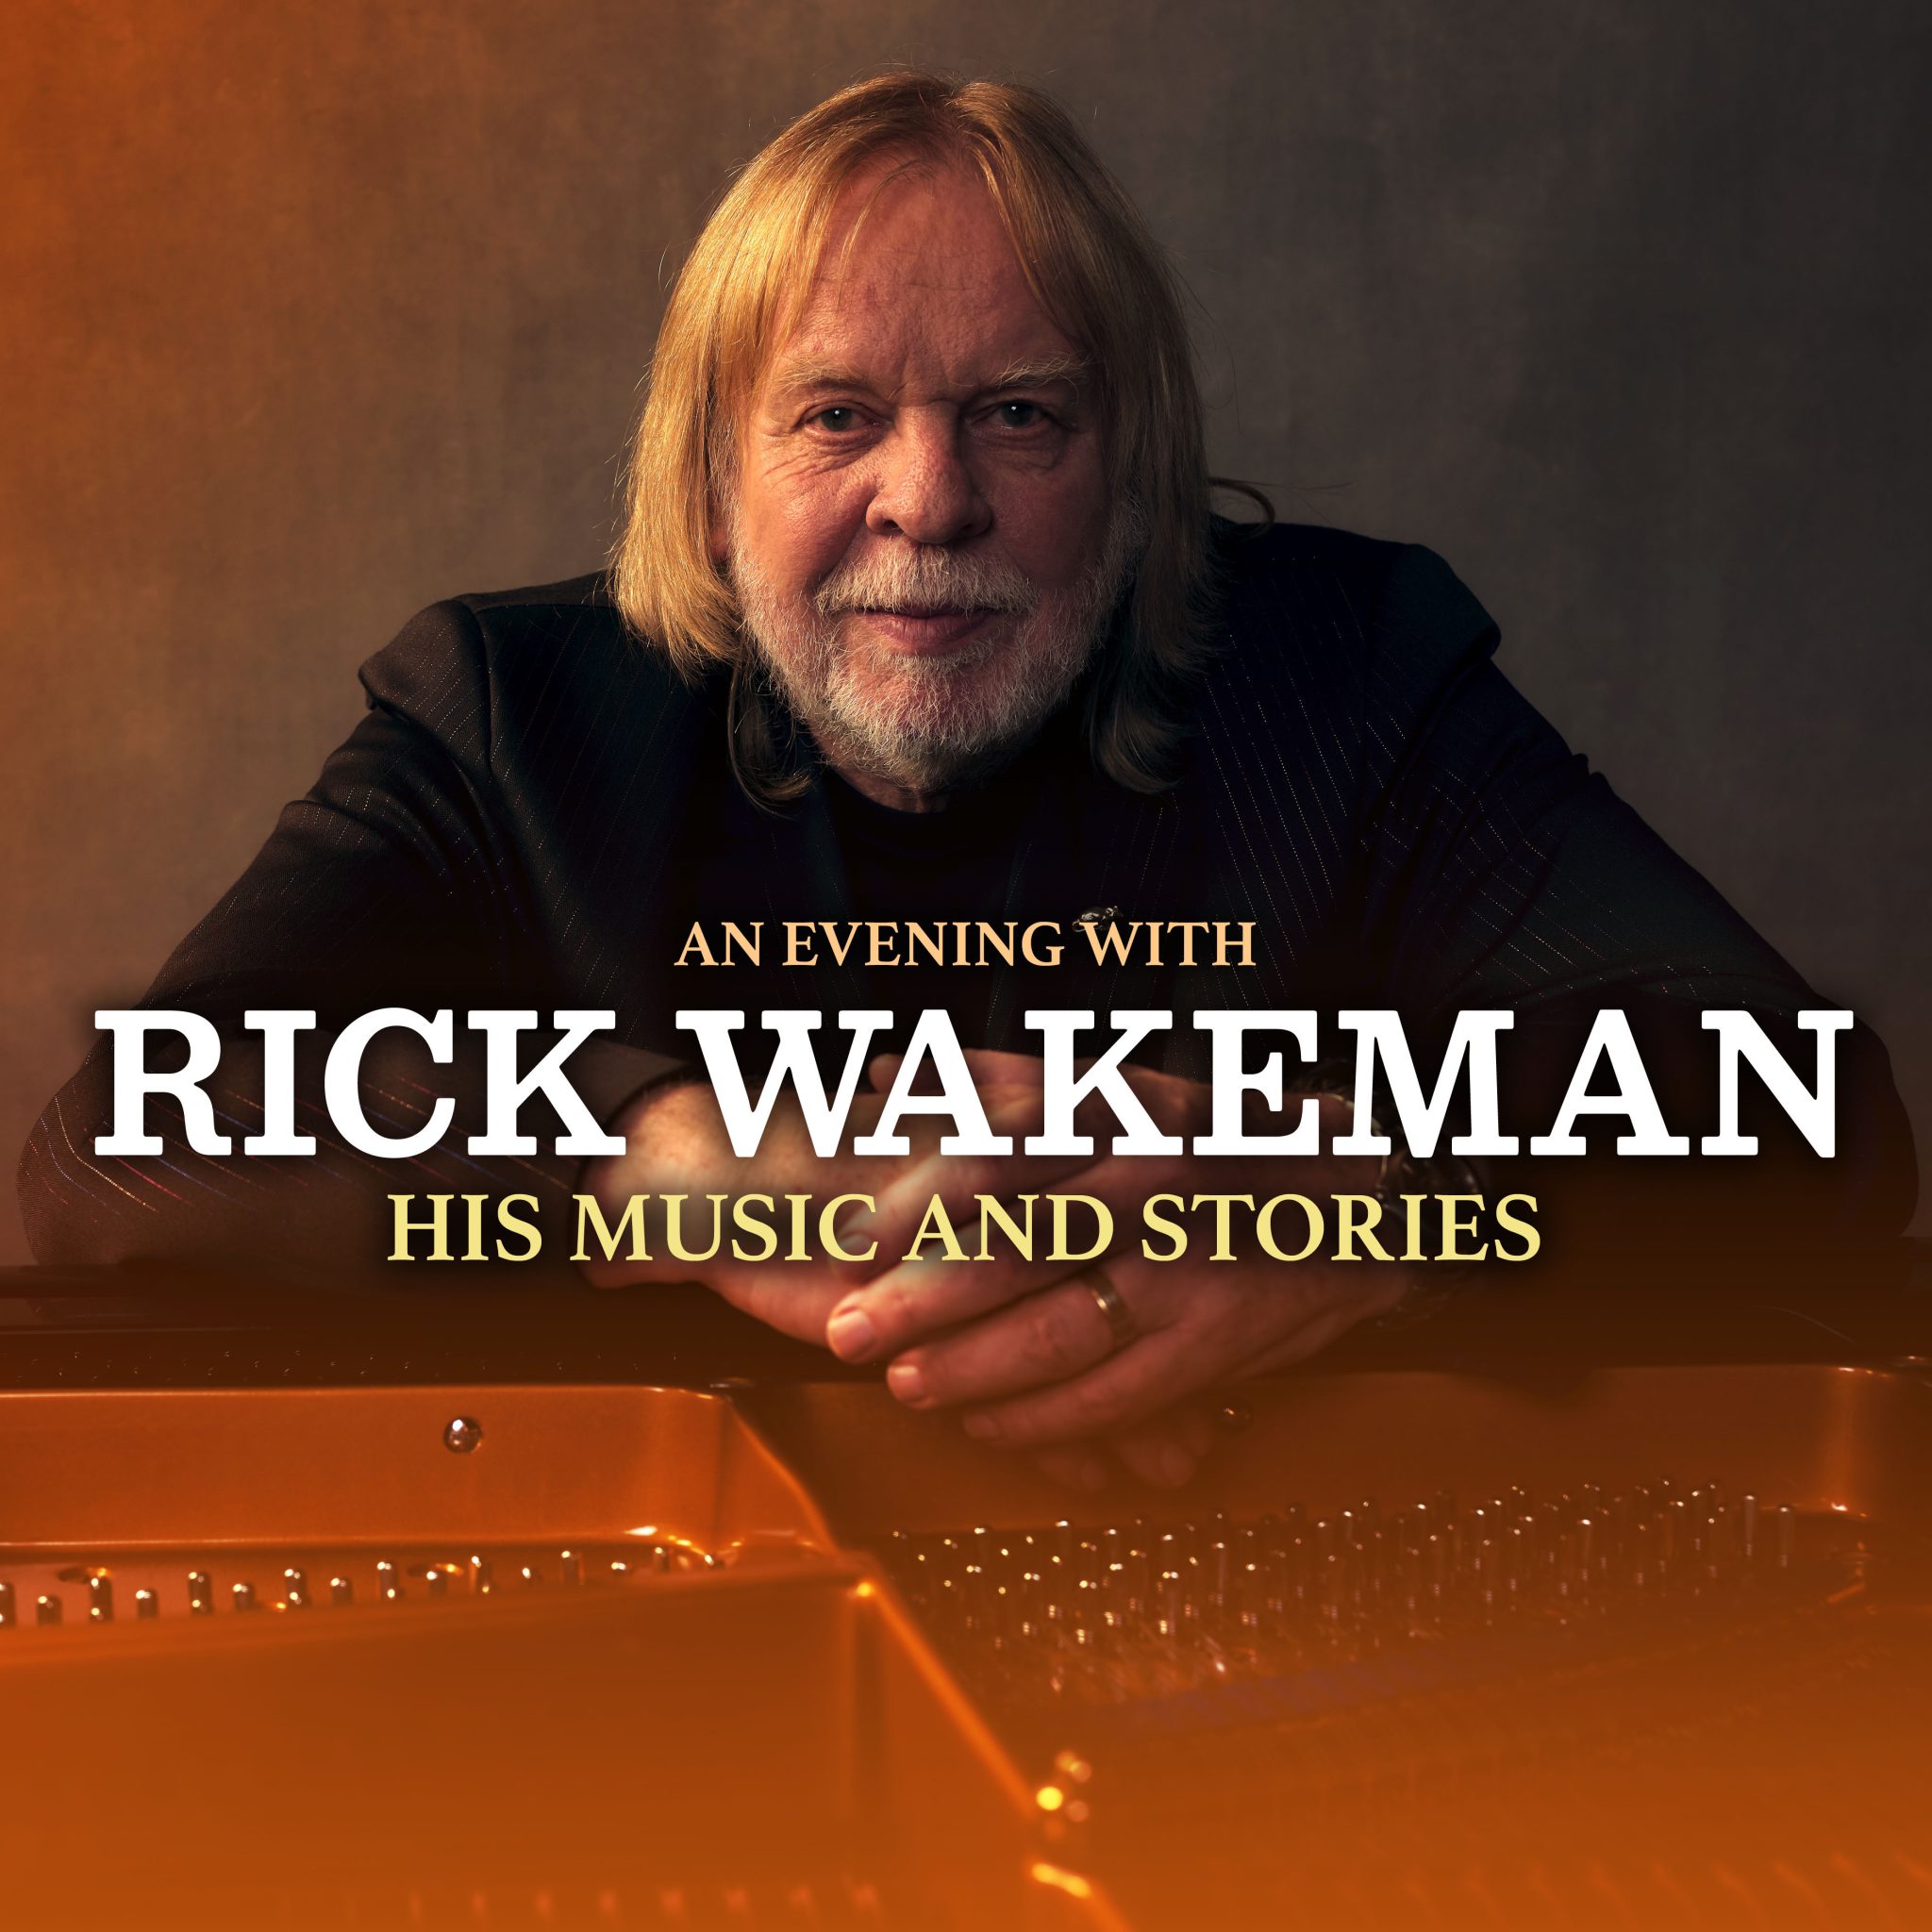 rick wakeman tour review